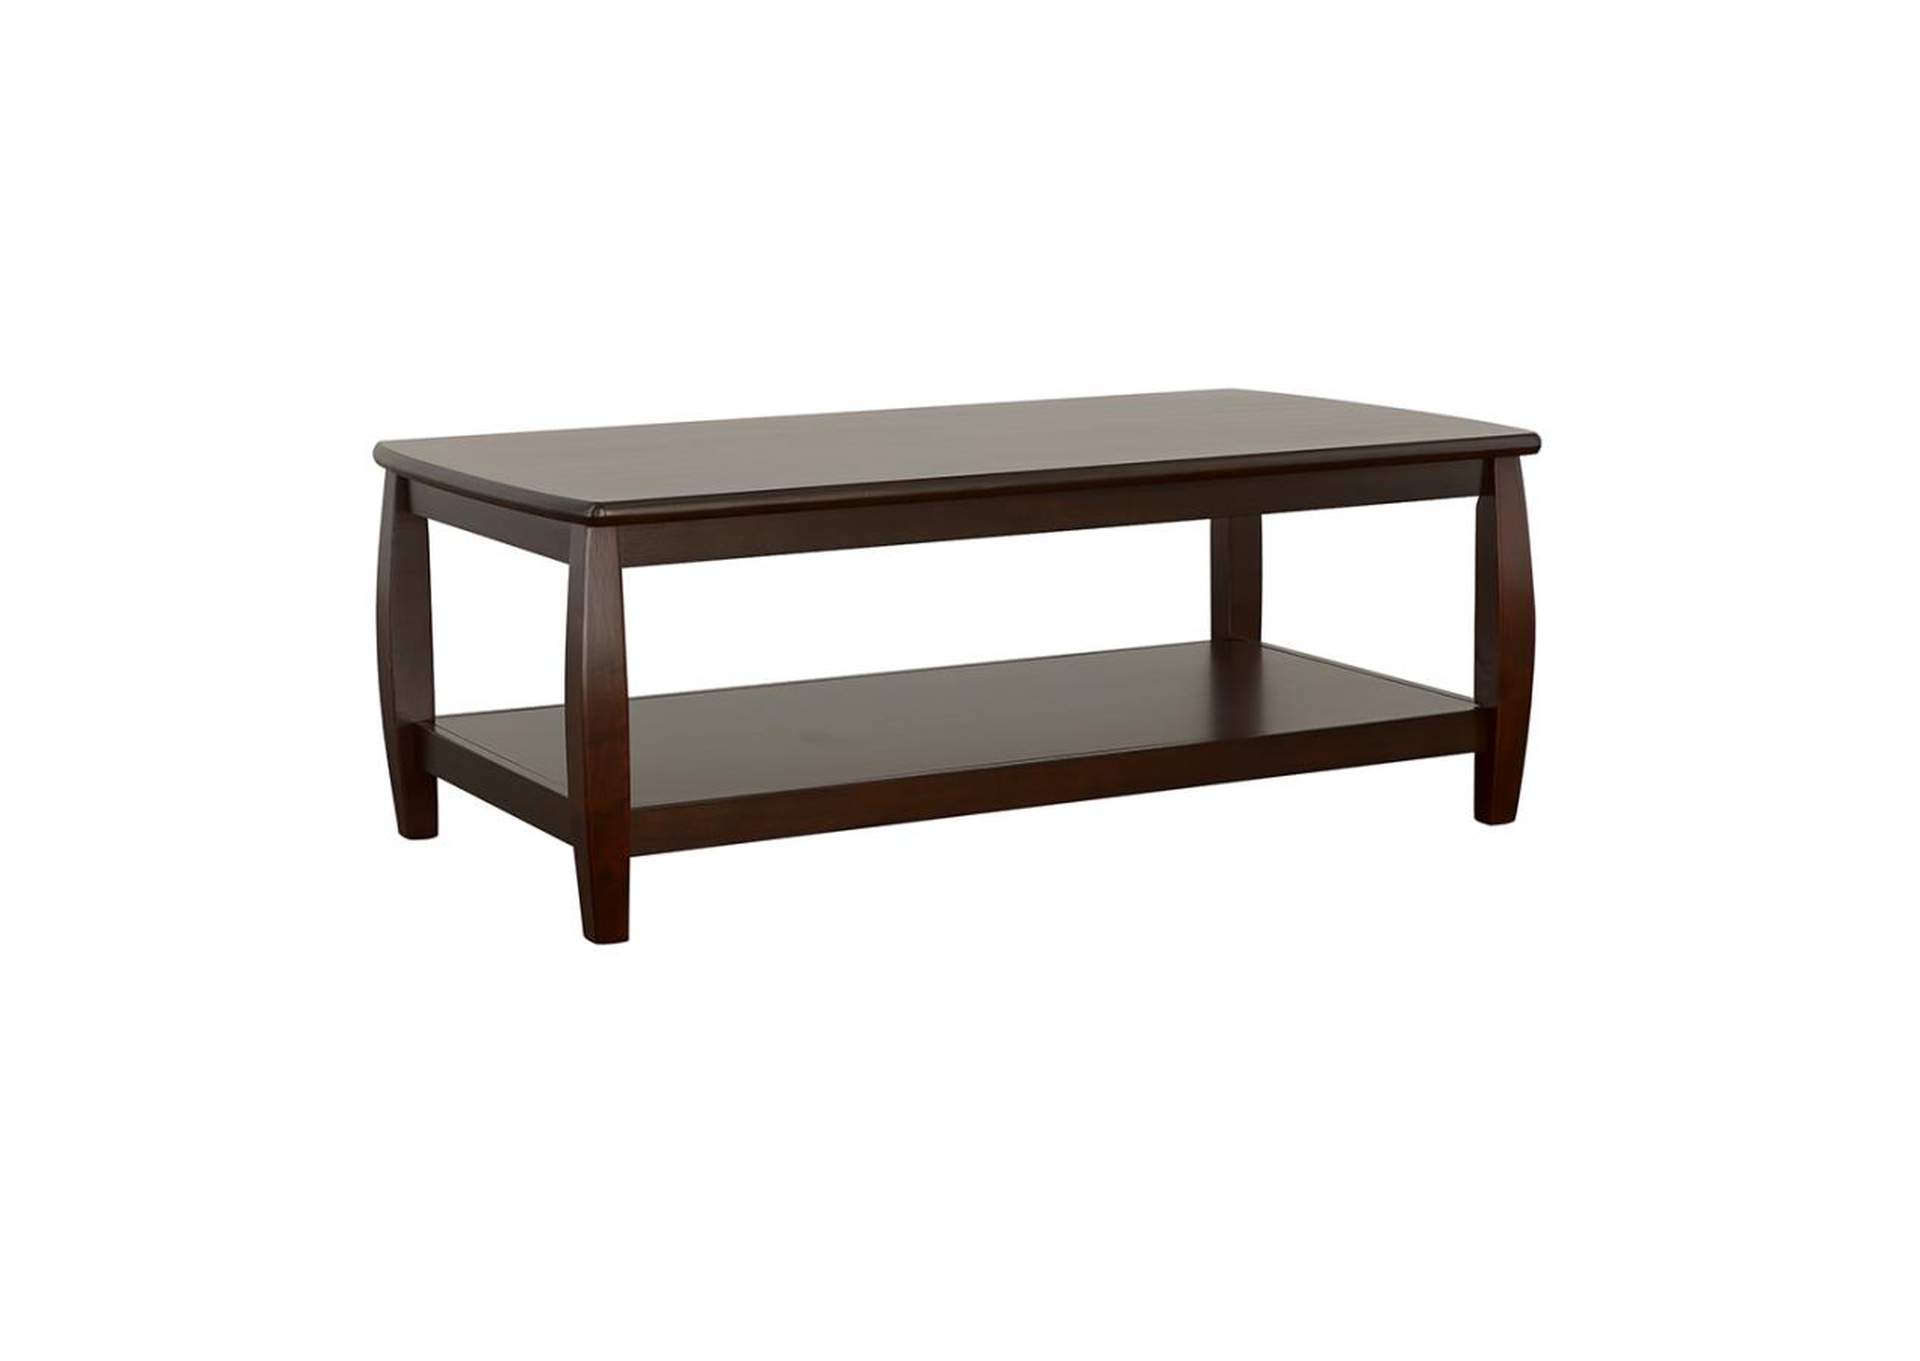 Dixon Rectangular Coffee Table With Lower Shelf Espresso,Coaster Furniture